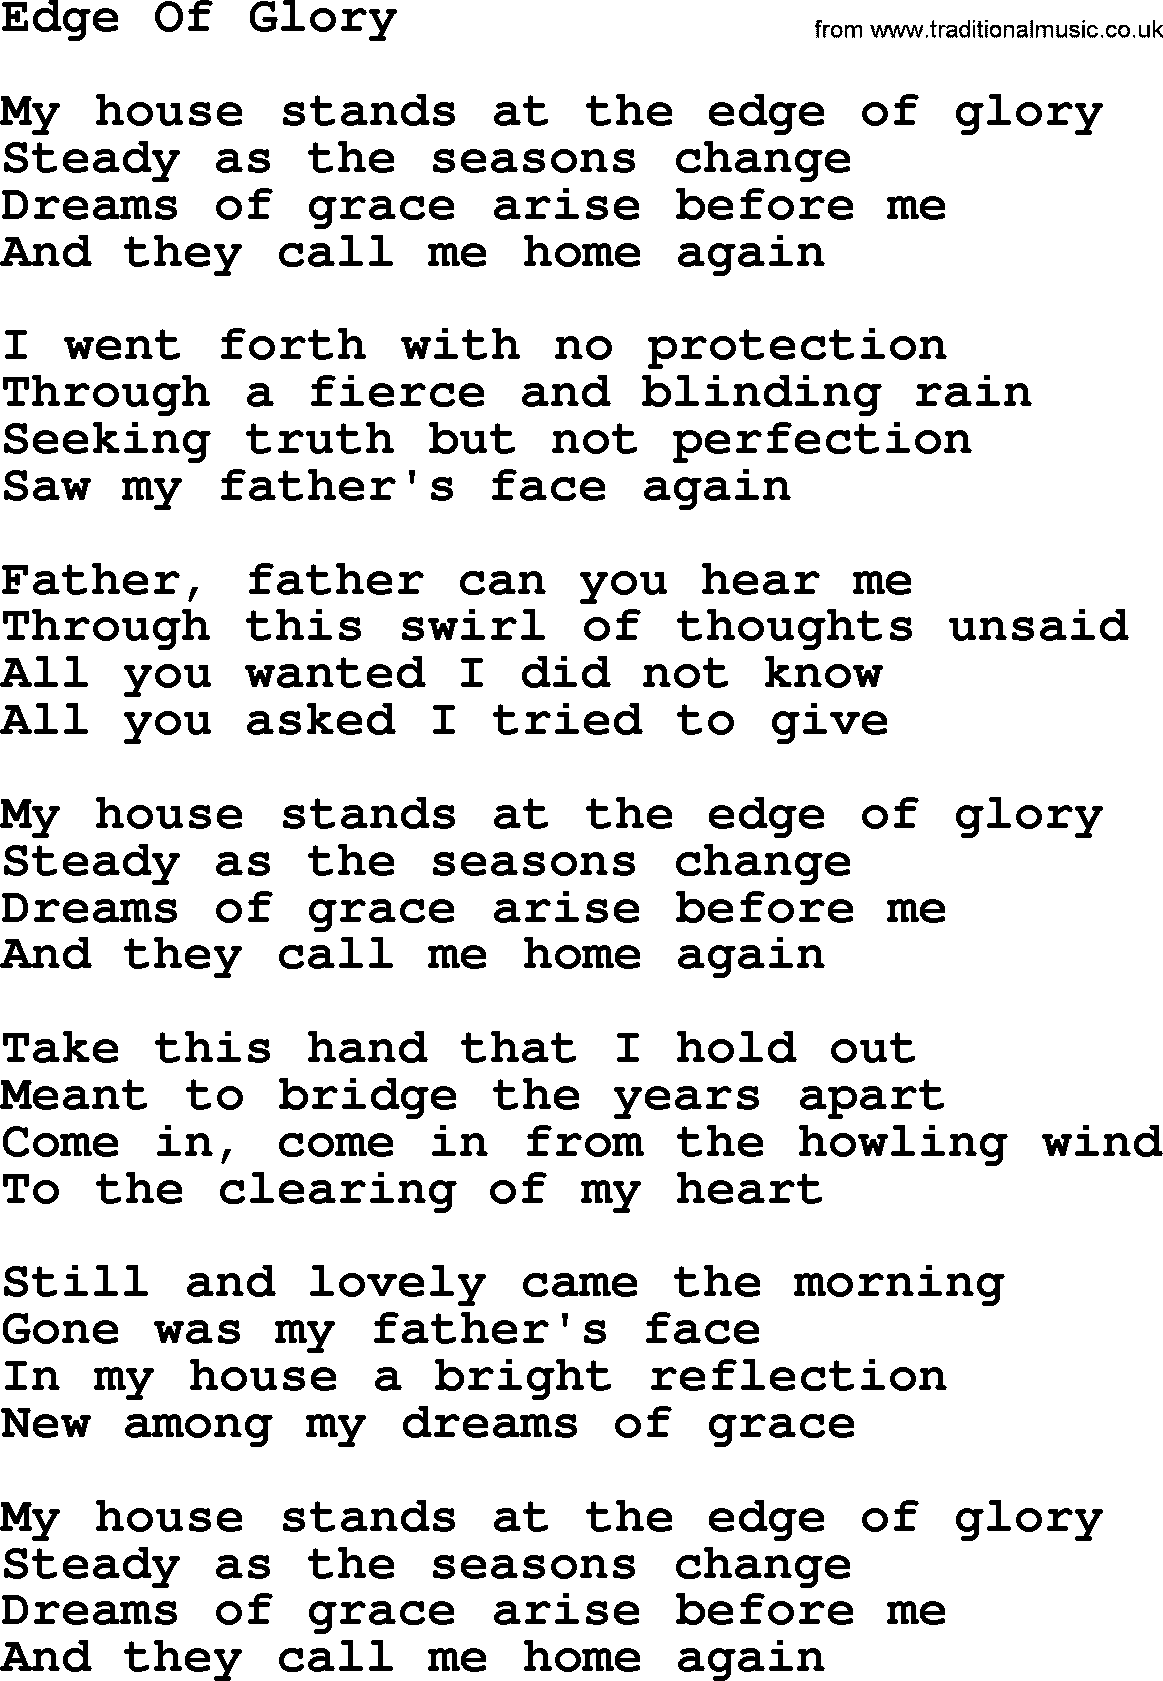 Joan Baez song Edge Of Glory, lyrics